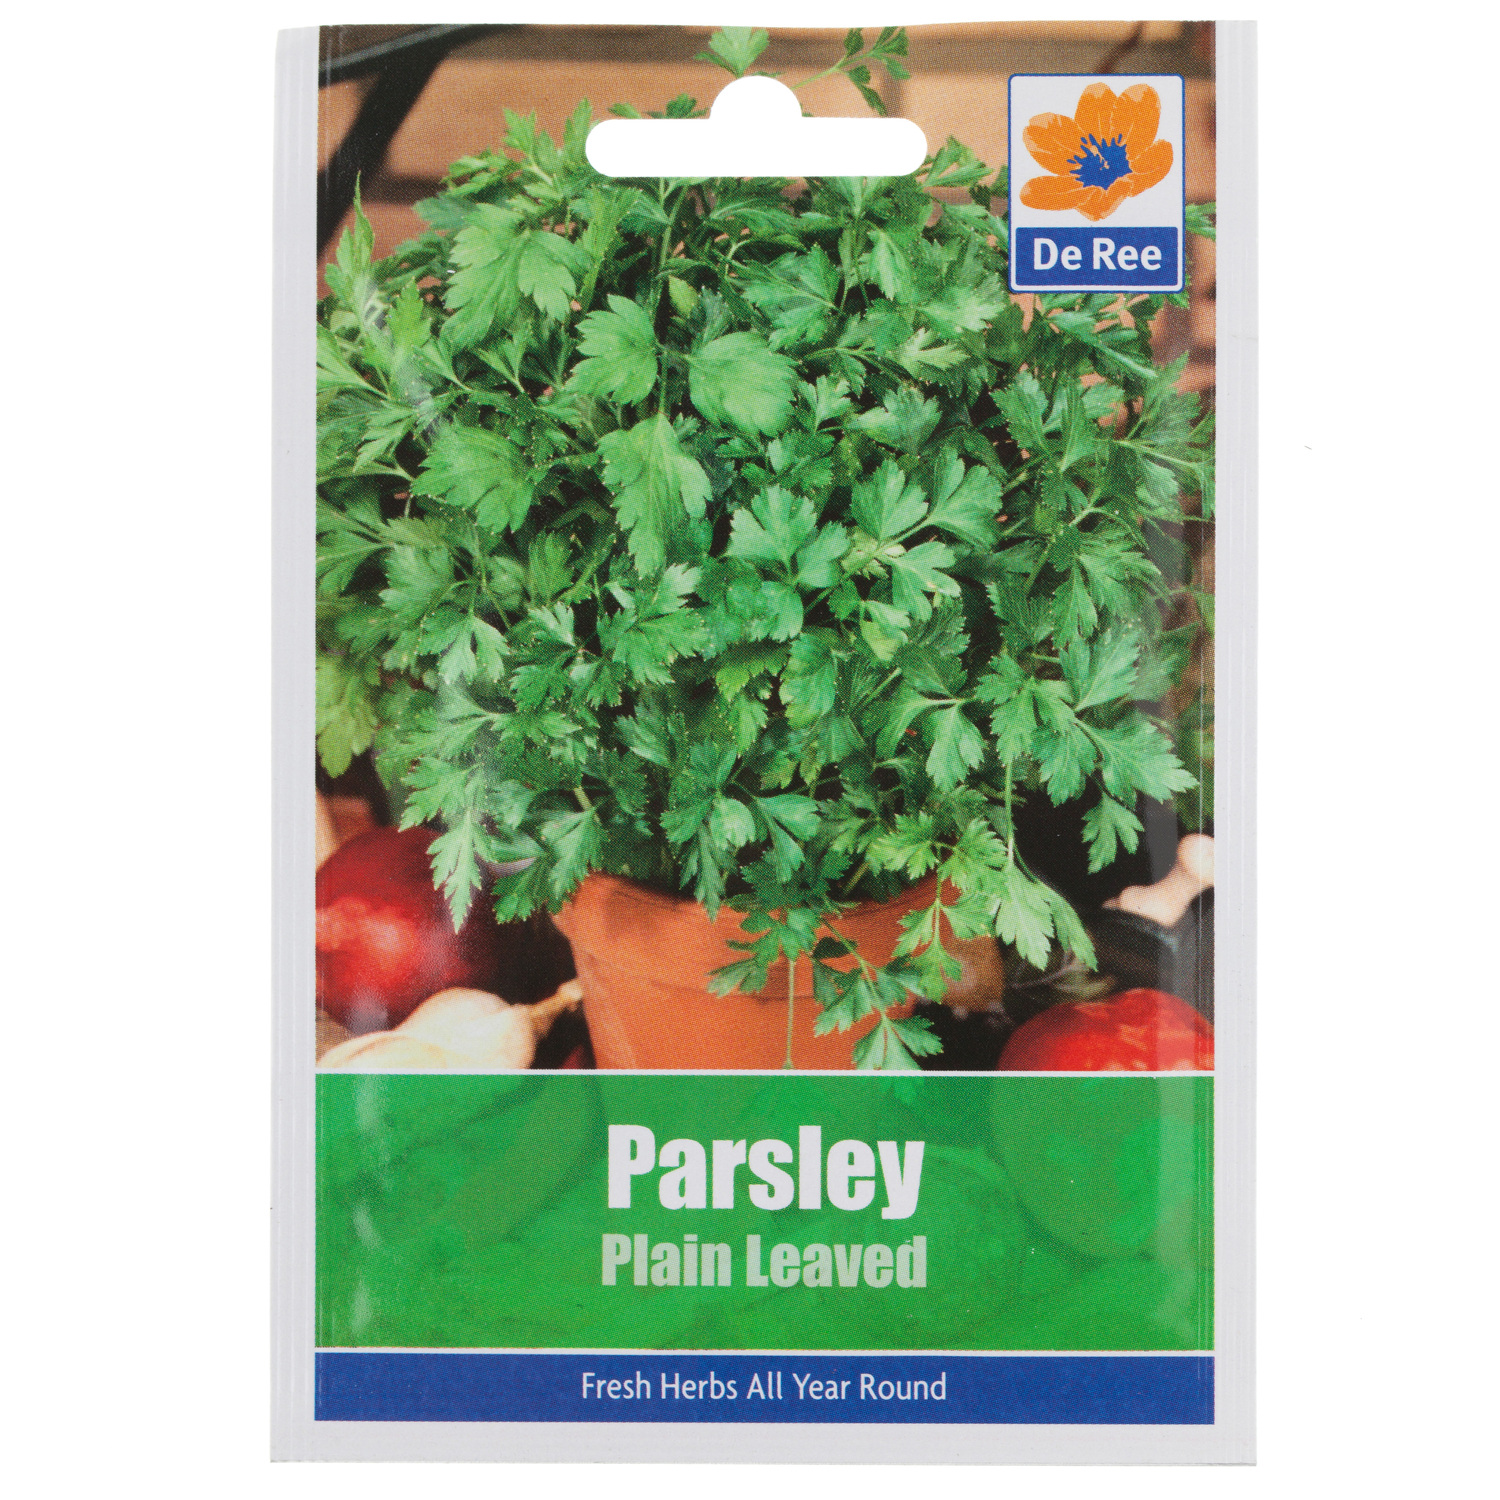 Plain Leaved Parsley Seed Packet Image